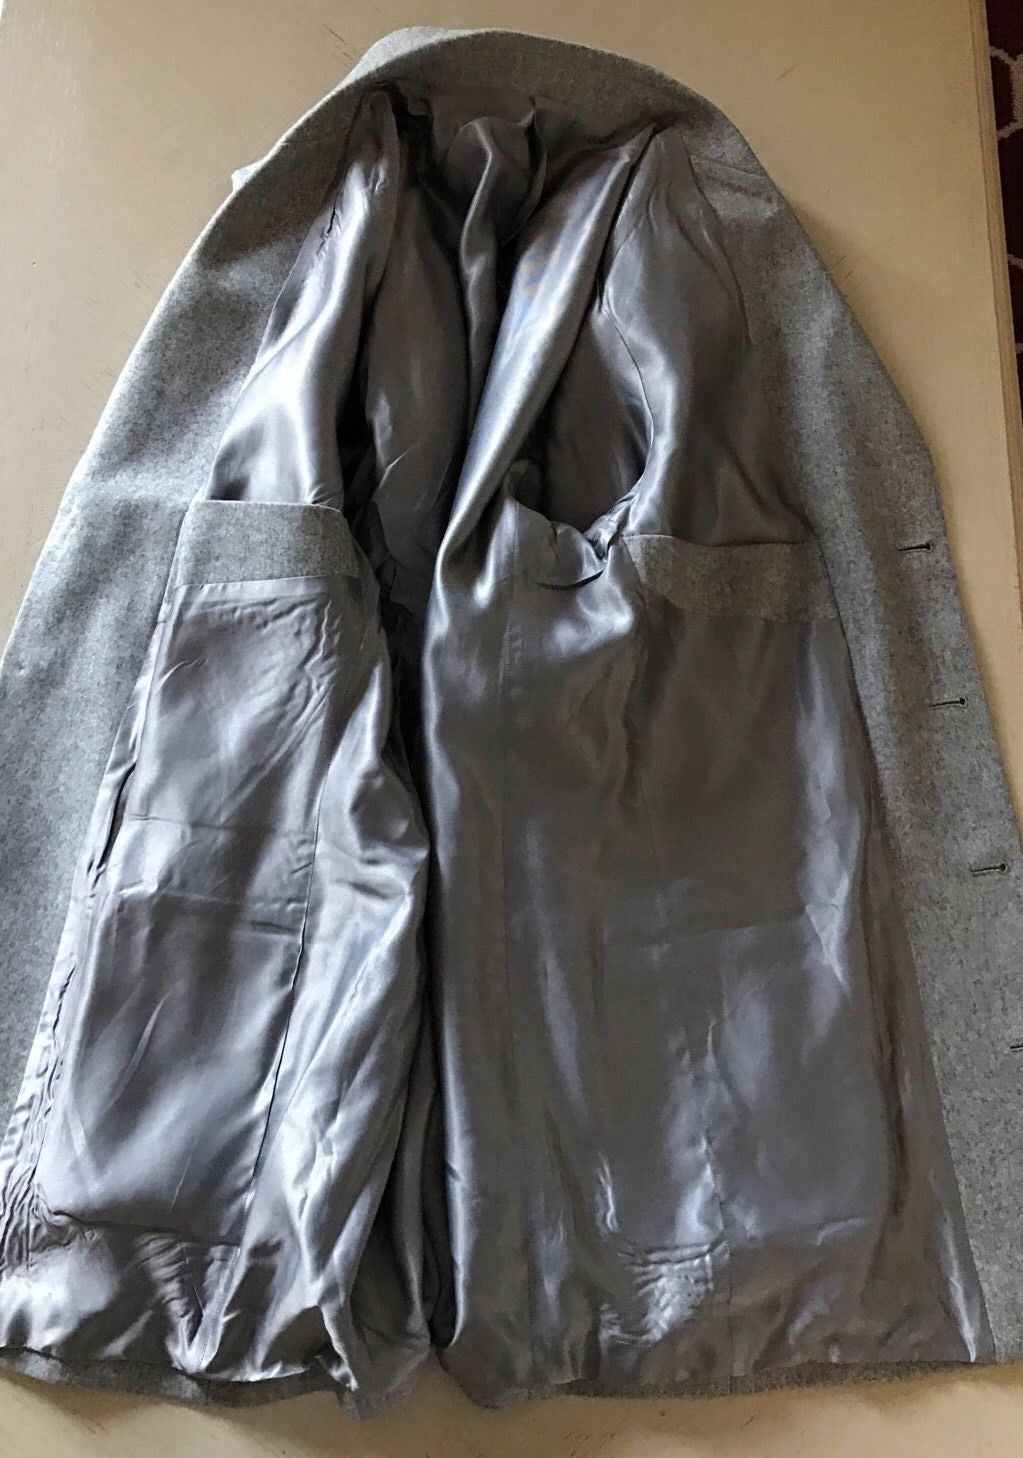 New Napoli Hand Made Men's Sport Coat Jacket, Blazer Gray 38 US ( 48 Eur ) - BAYSUPERSTORE